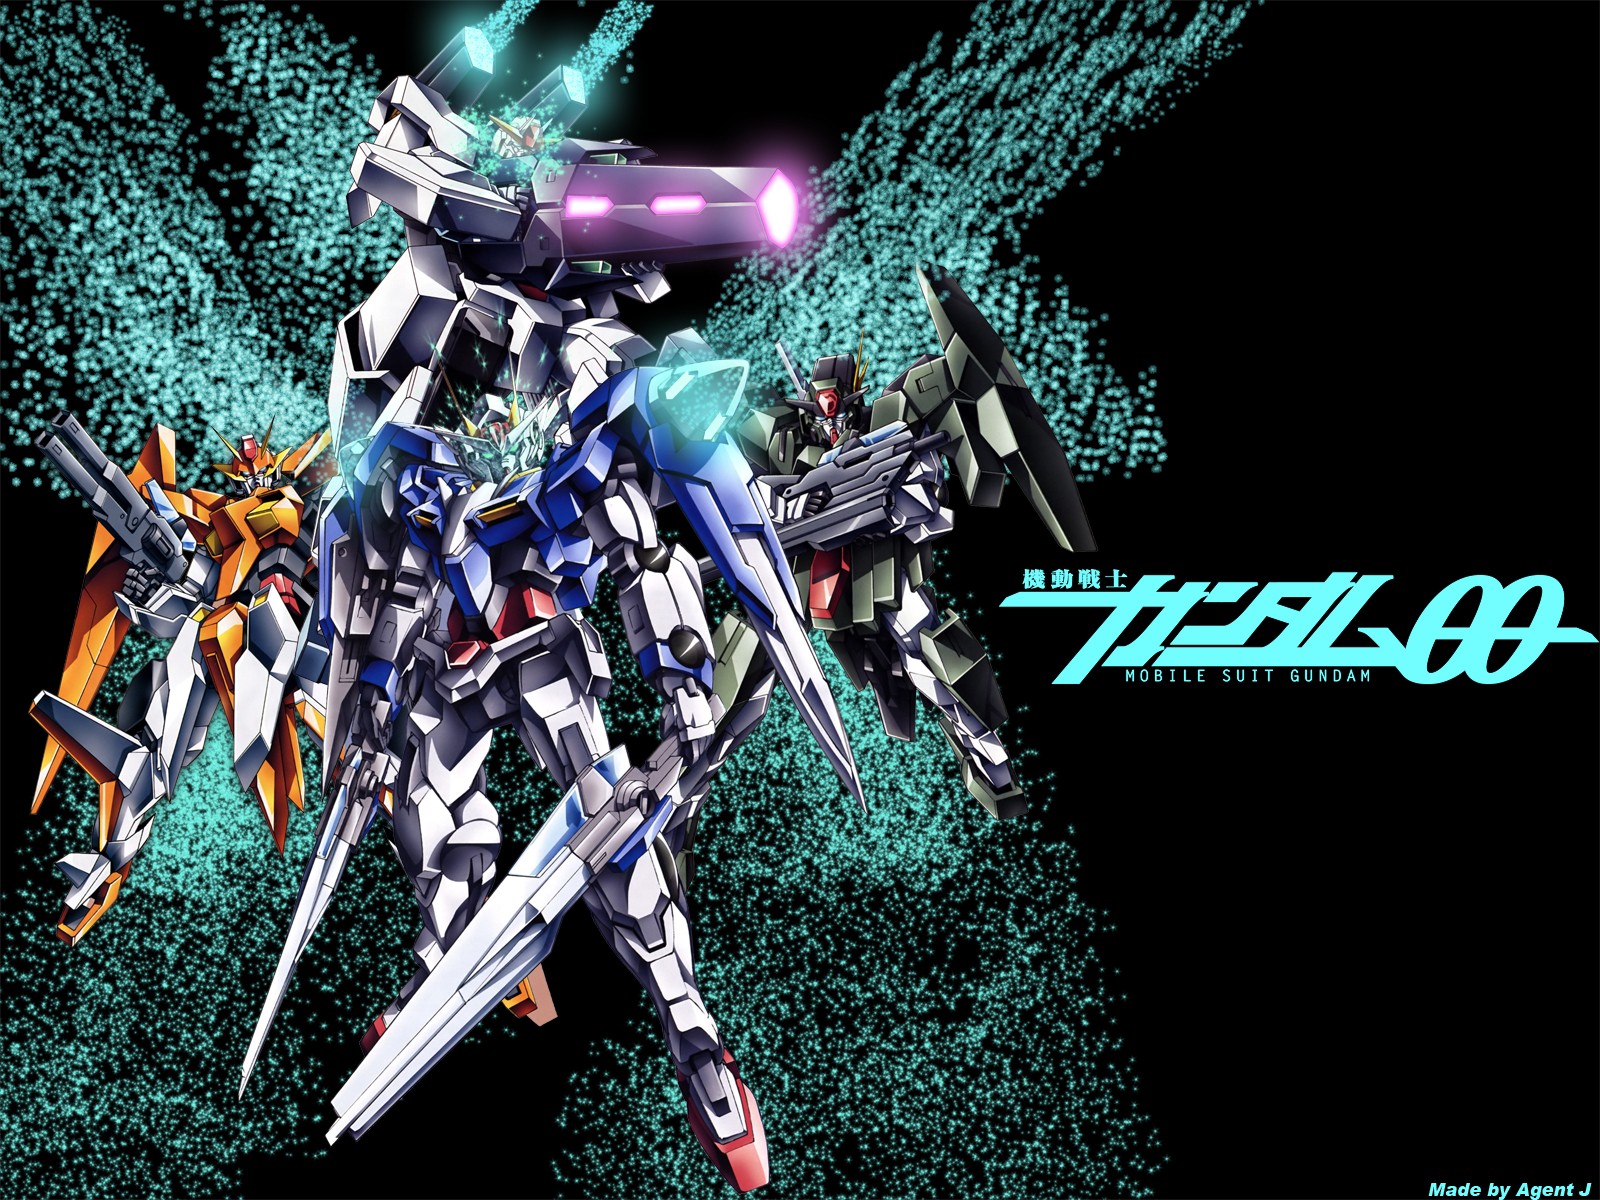 Anime Mobile Suit Gundam 00 Gundam Cyan 1600x10 Wallpaper Wallhaven Cc